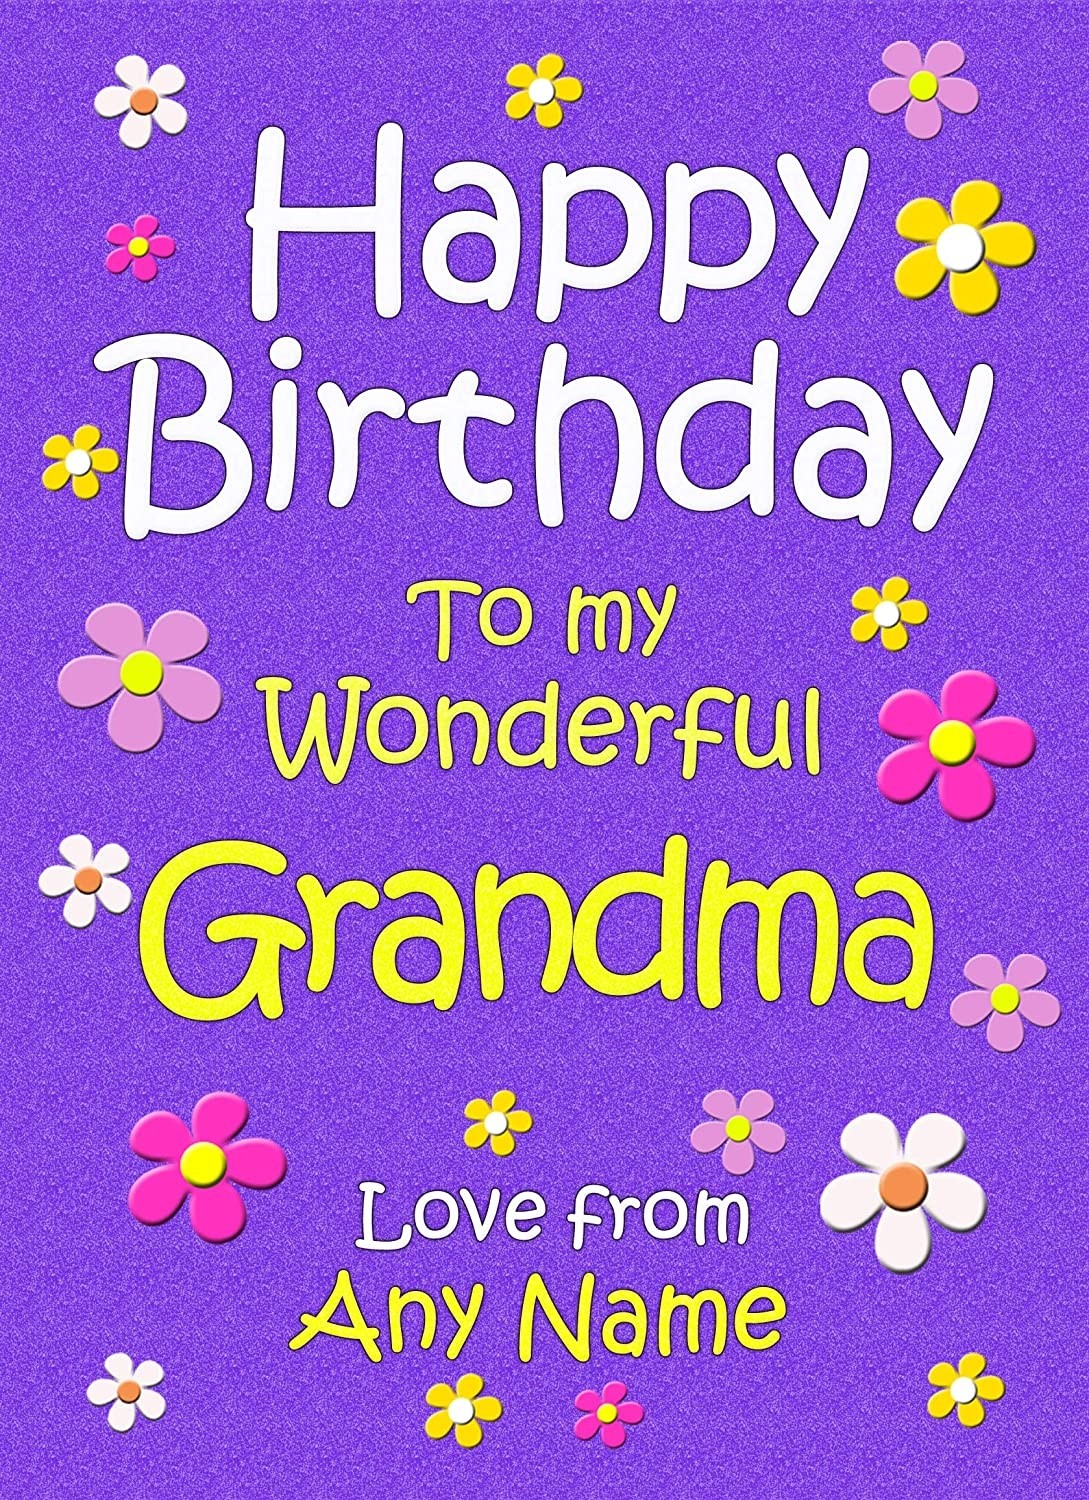 Personalised Grandma Birthday Card (Purple)